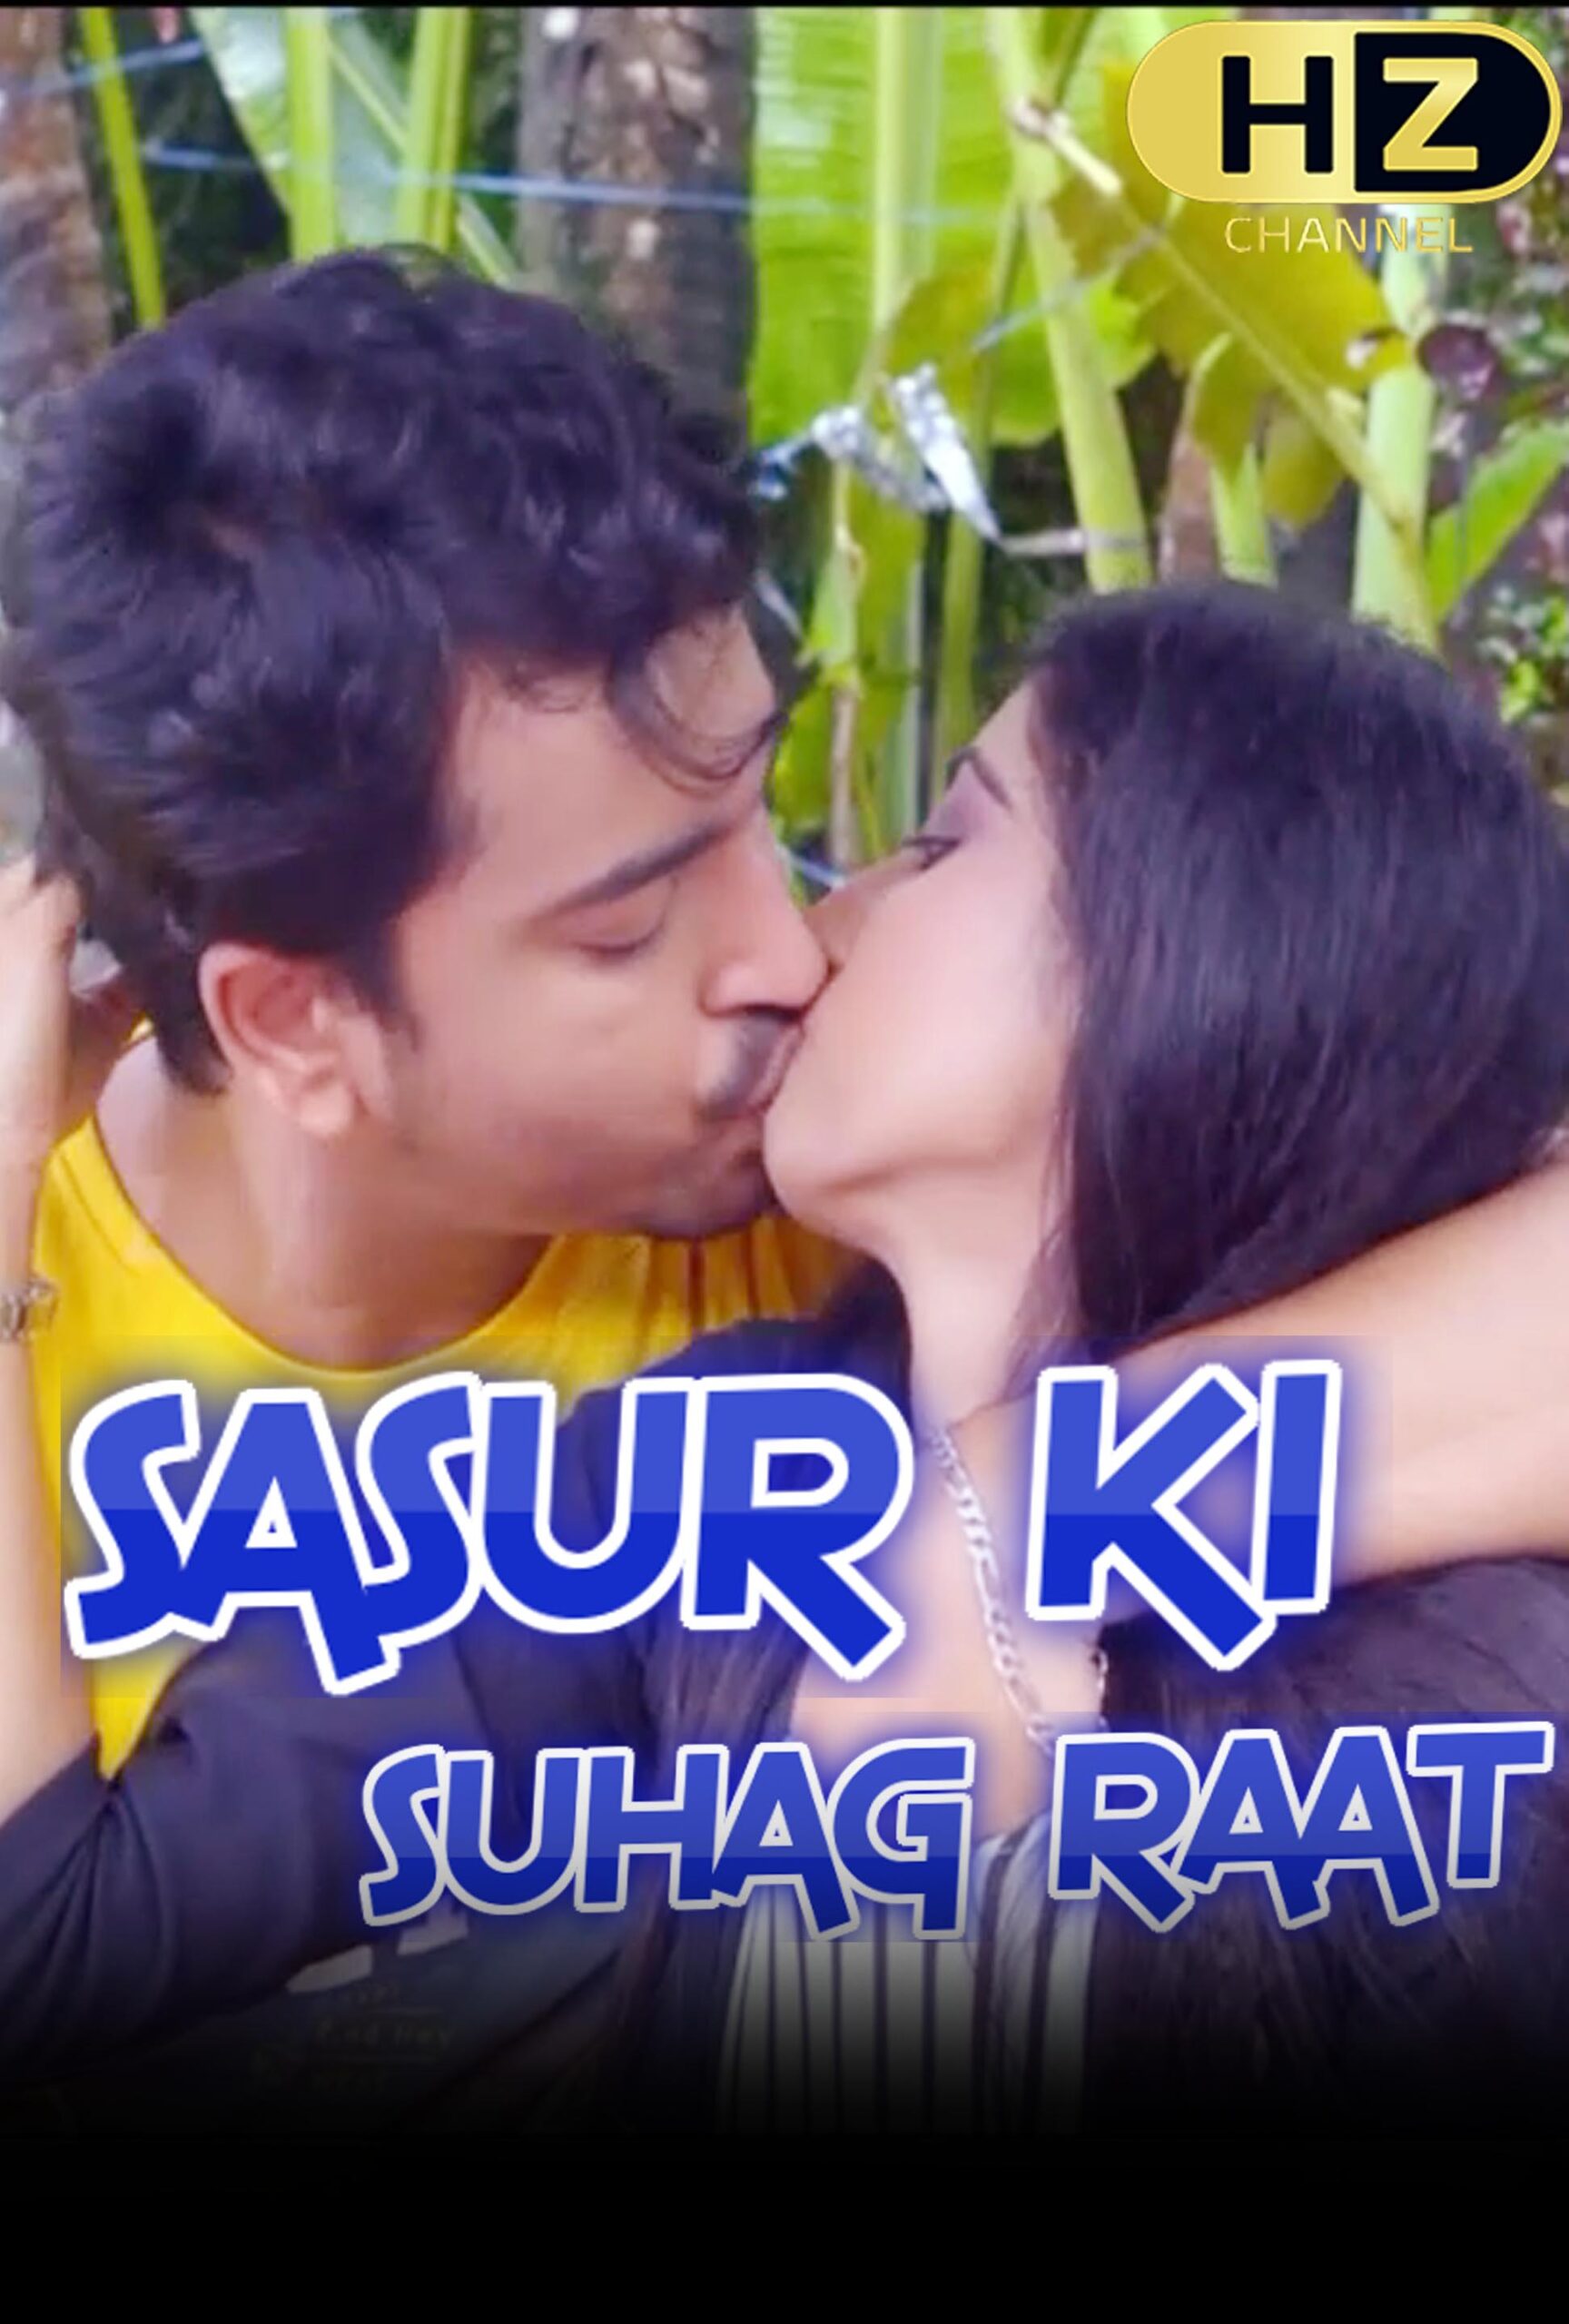 You are currently viewing Sasur Ki Suhagrat 2020 Hindi S01E02 Hot Web Series 720p HDRip 200MB Download & Watch Online